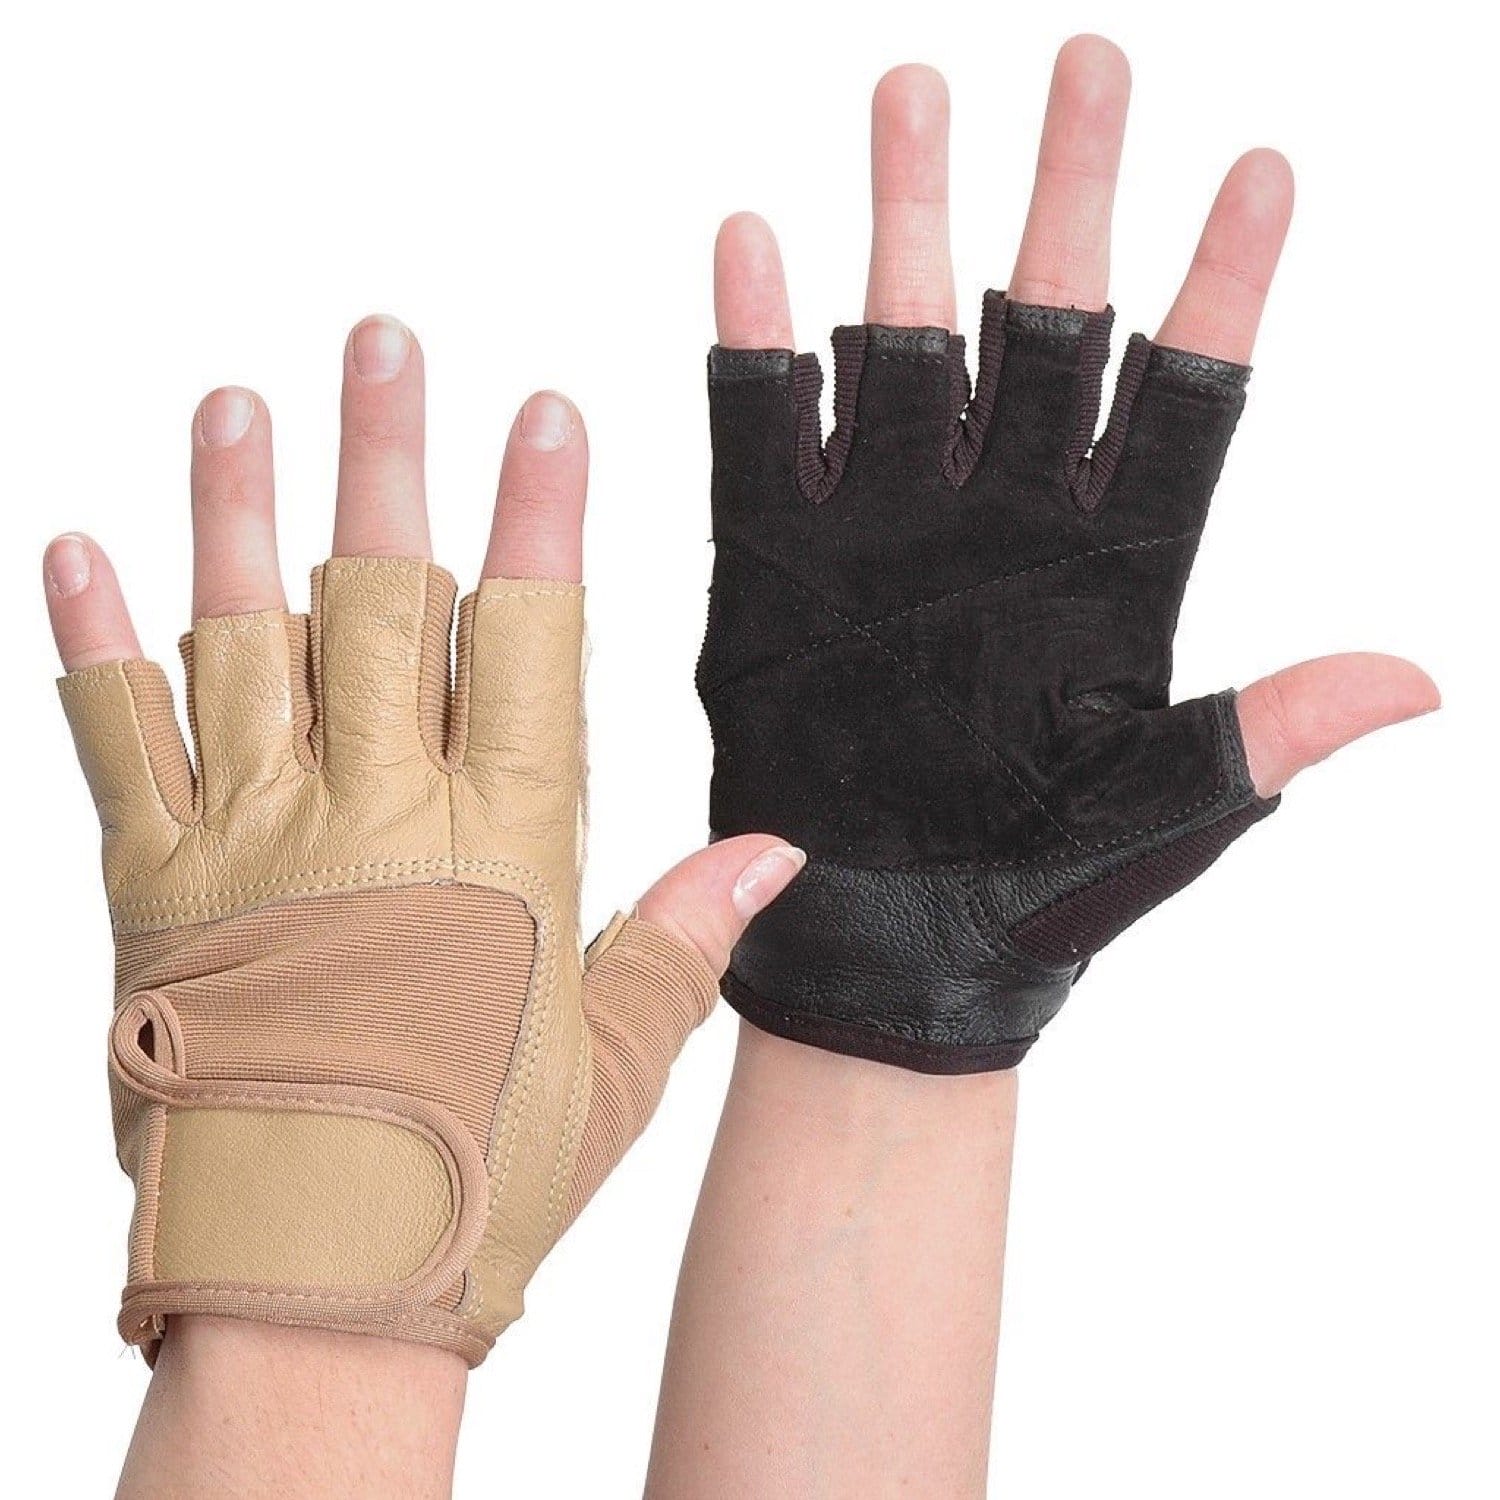 https://ebsuorn3sy3.exactdn.com/wp-content/uploads/2018/01/Styleplus-Talon-Fingerless-Color-Guard-Gloves.jpg?strip=all&lossy=1&ssl=1